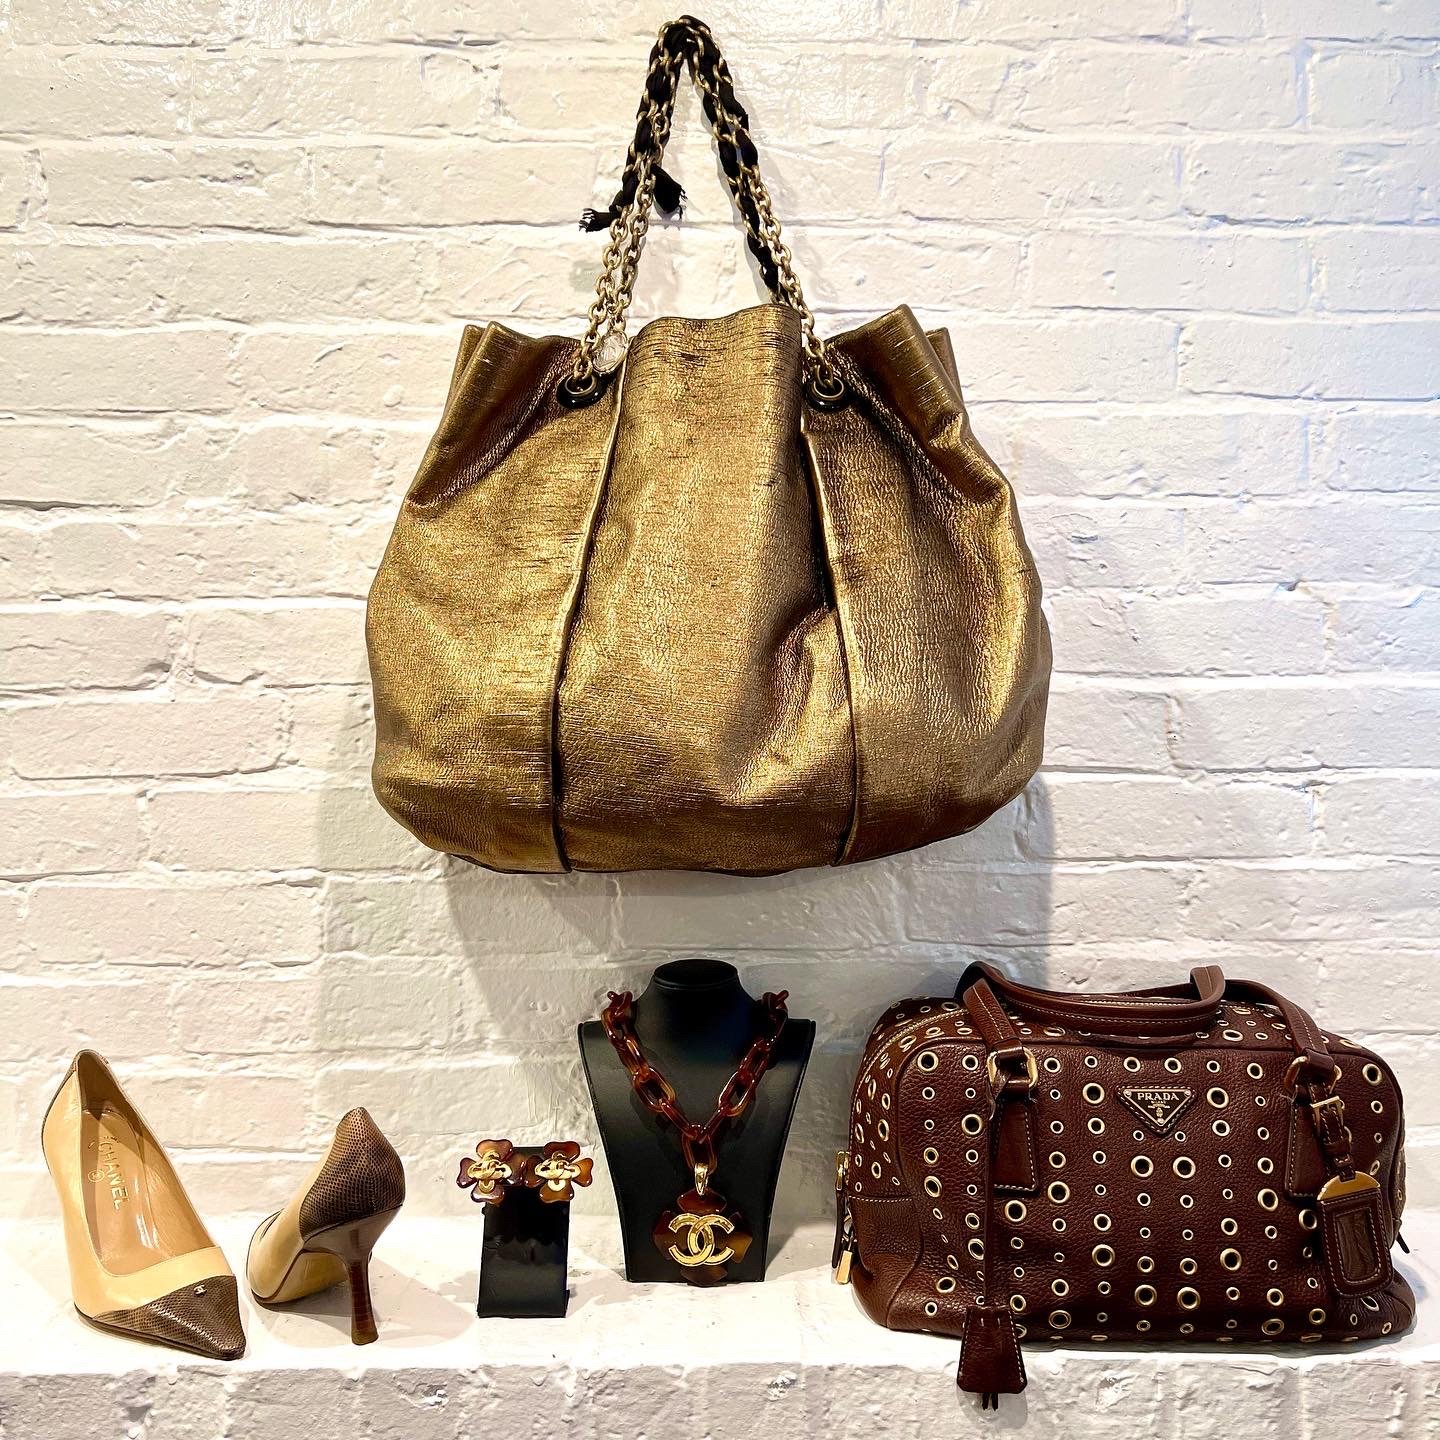 Kate Chanel Maroon Burgundy Handbag Nouvelle Flap Bag Enamel